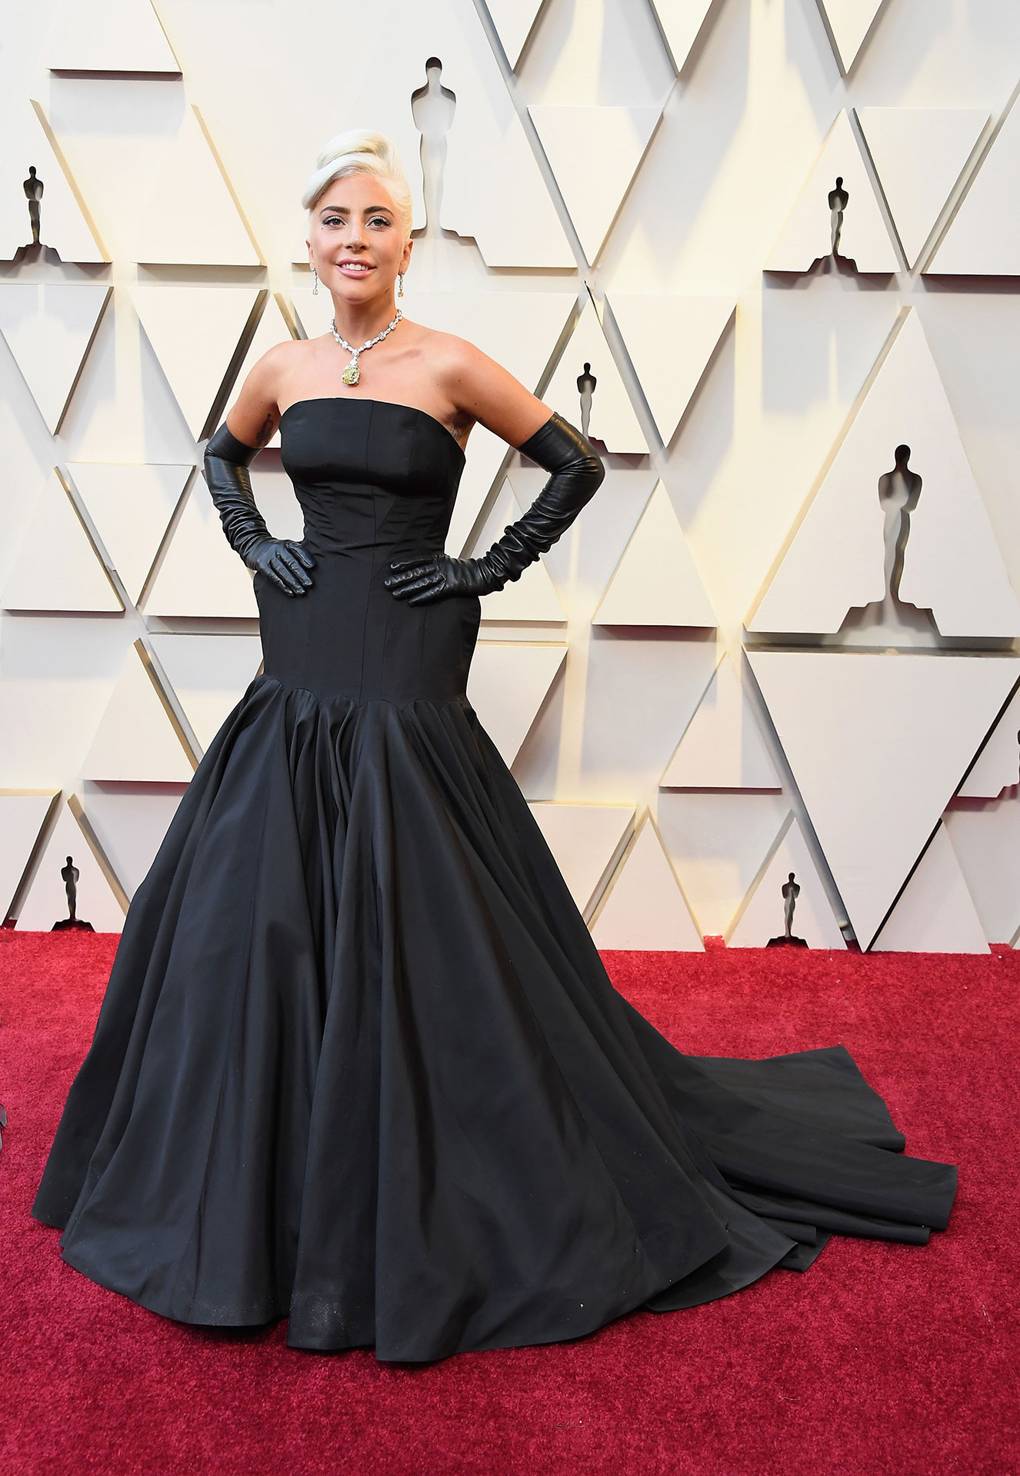 Oscars Best Dressed 2019 - Lady Gaga in Alexander McQueen